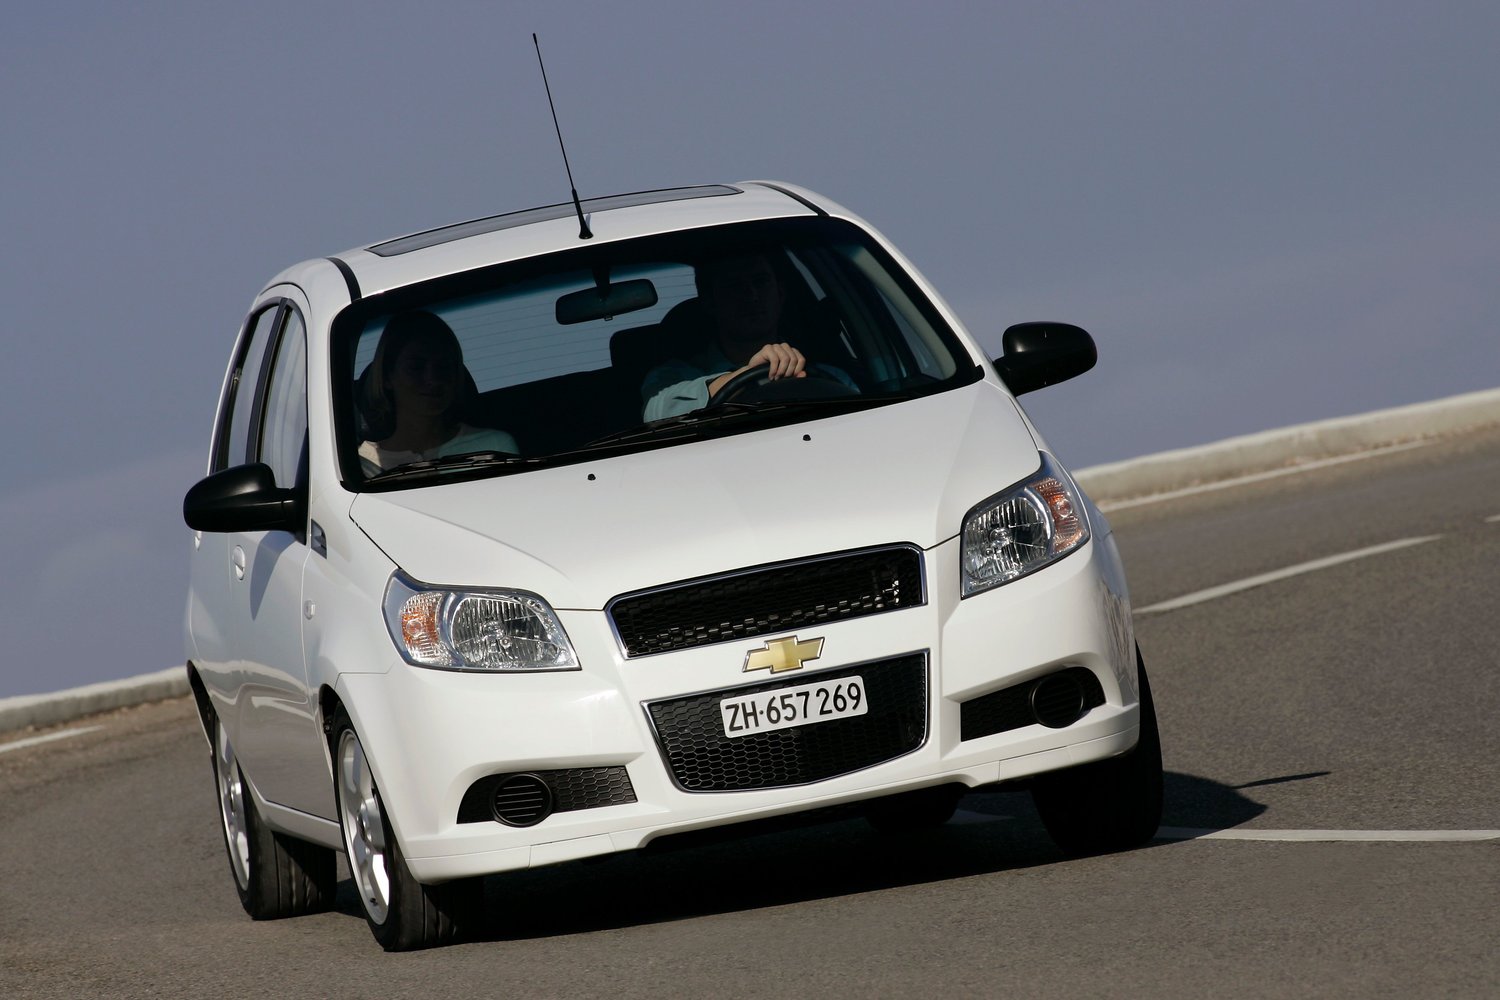 хэтчбек 5 дв. Chevrolet Aveo 2006 - 2012г выпуска модификация Base 1.2 MT (84 л.с.)